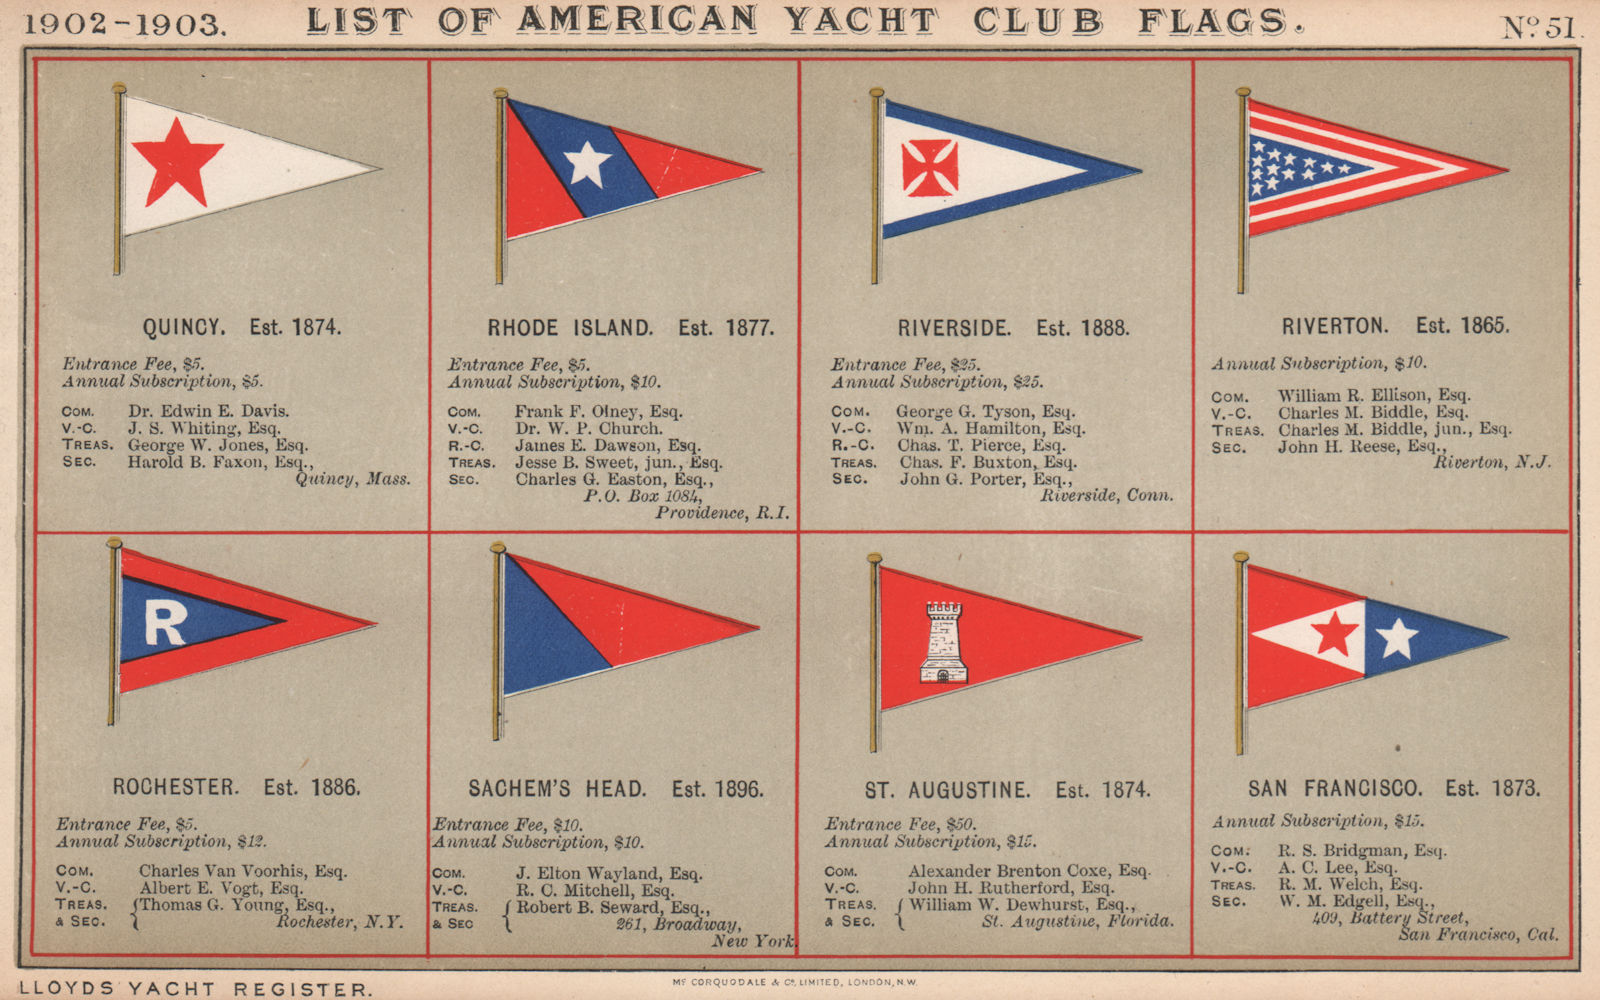 US YACHT CLUB FLAGS Q-S. Quincy Rhode Island Rochester San Francisco 1902